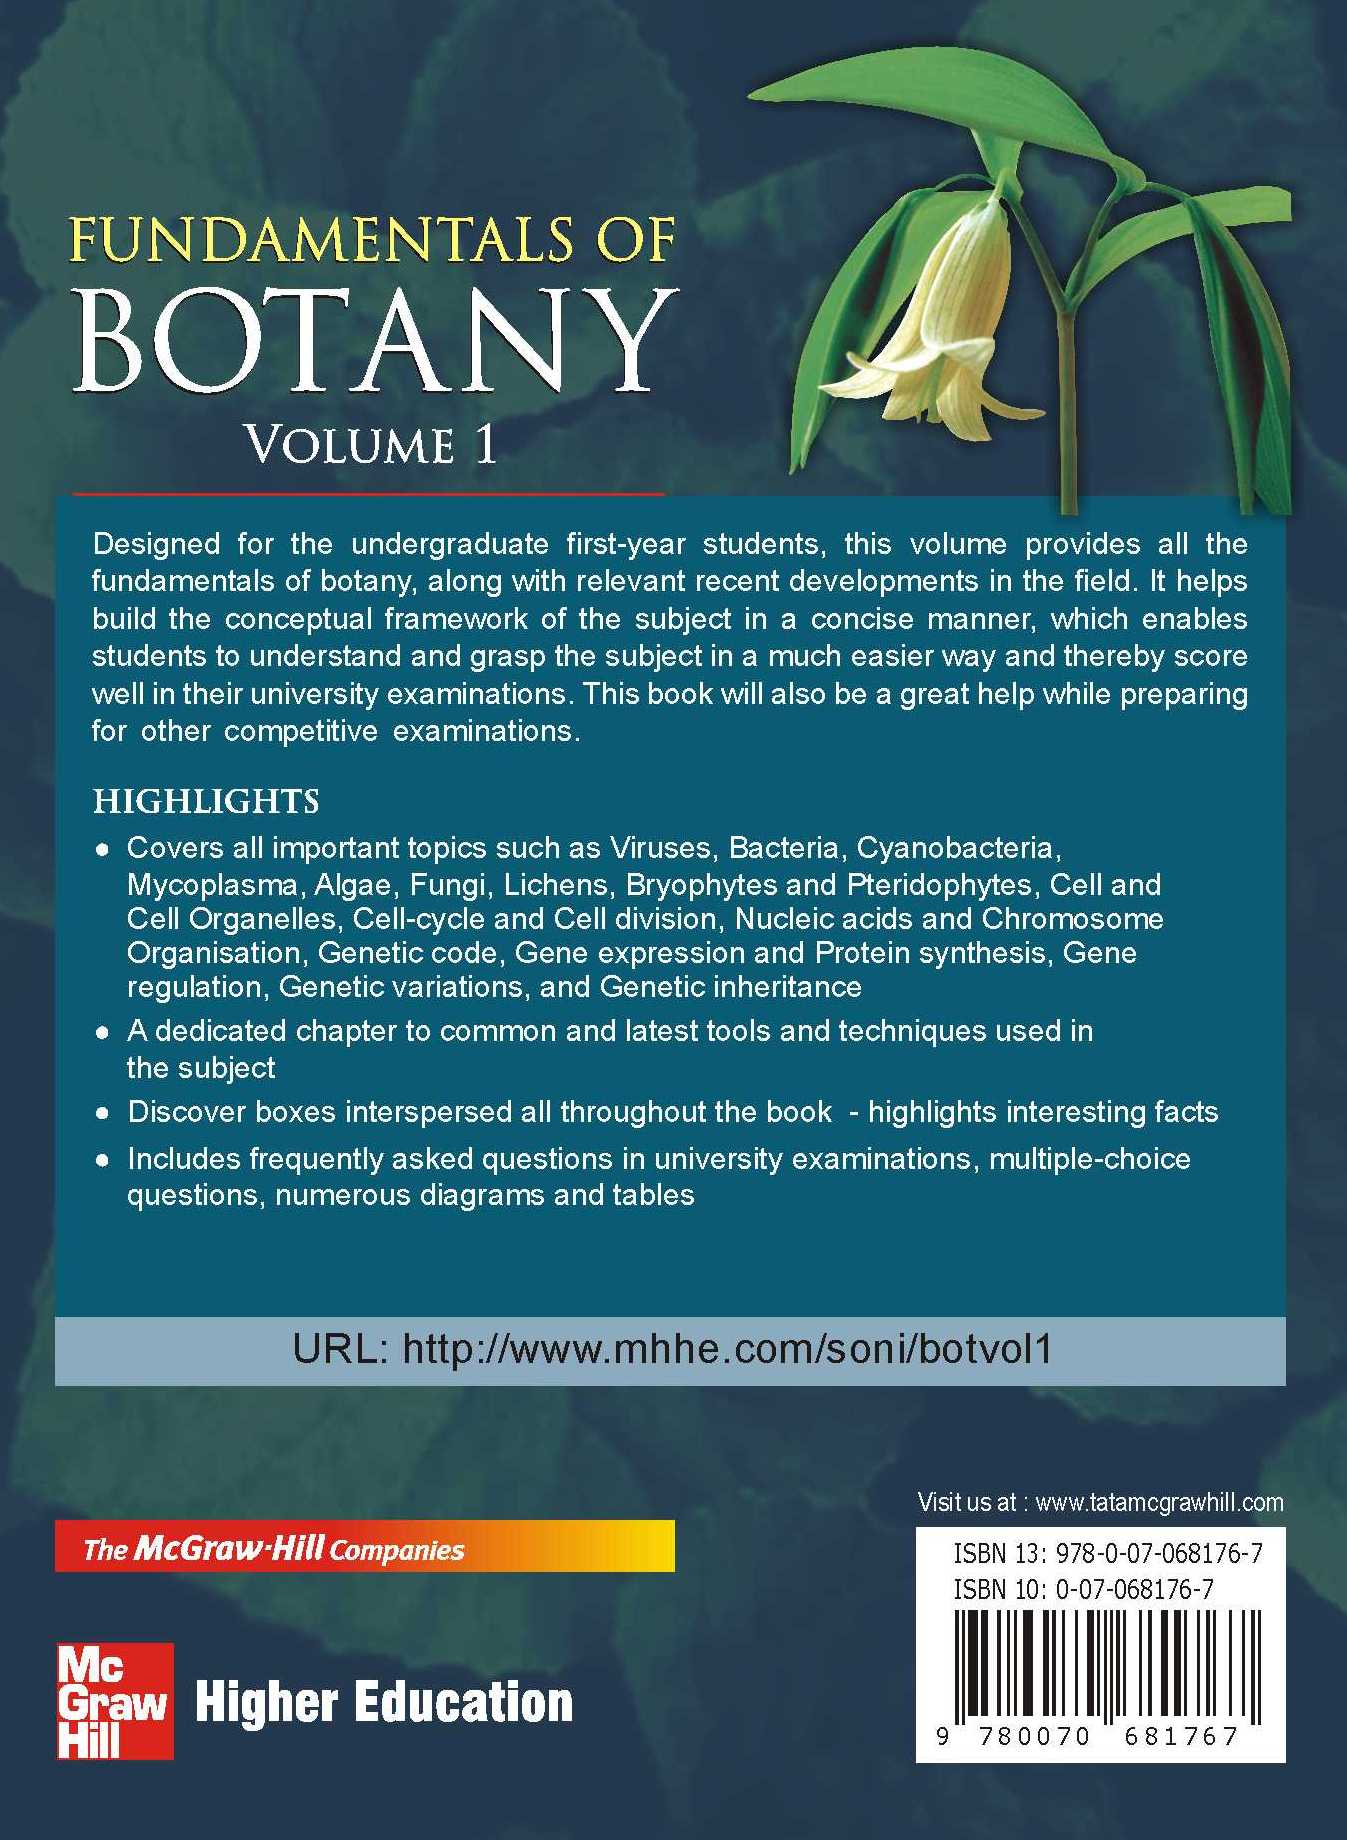 Fundamentals of Botany, Volume I Information Center: Salient Features